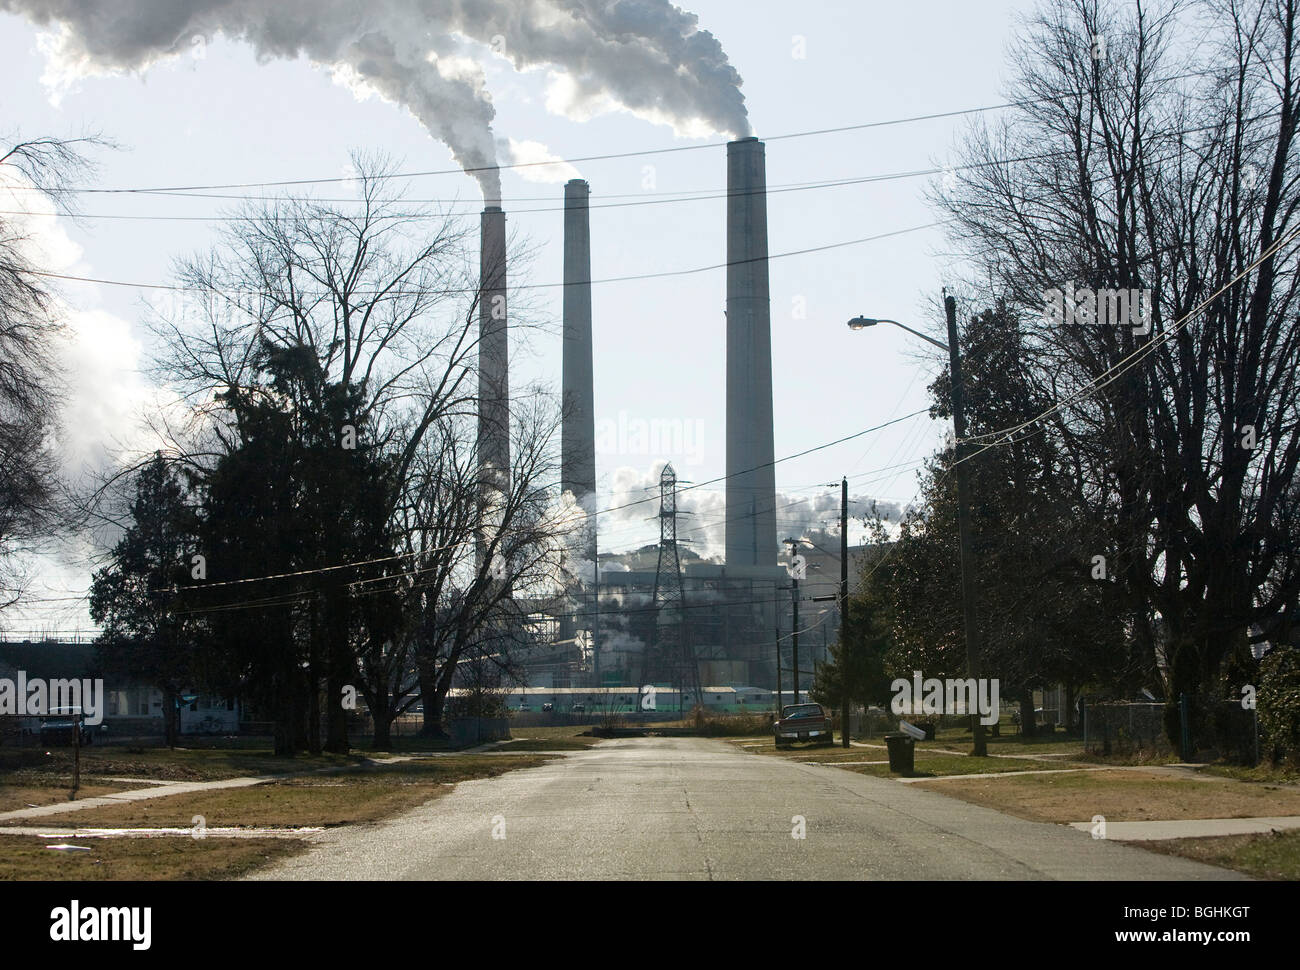 Power plant smokestacks.  Stock Photo